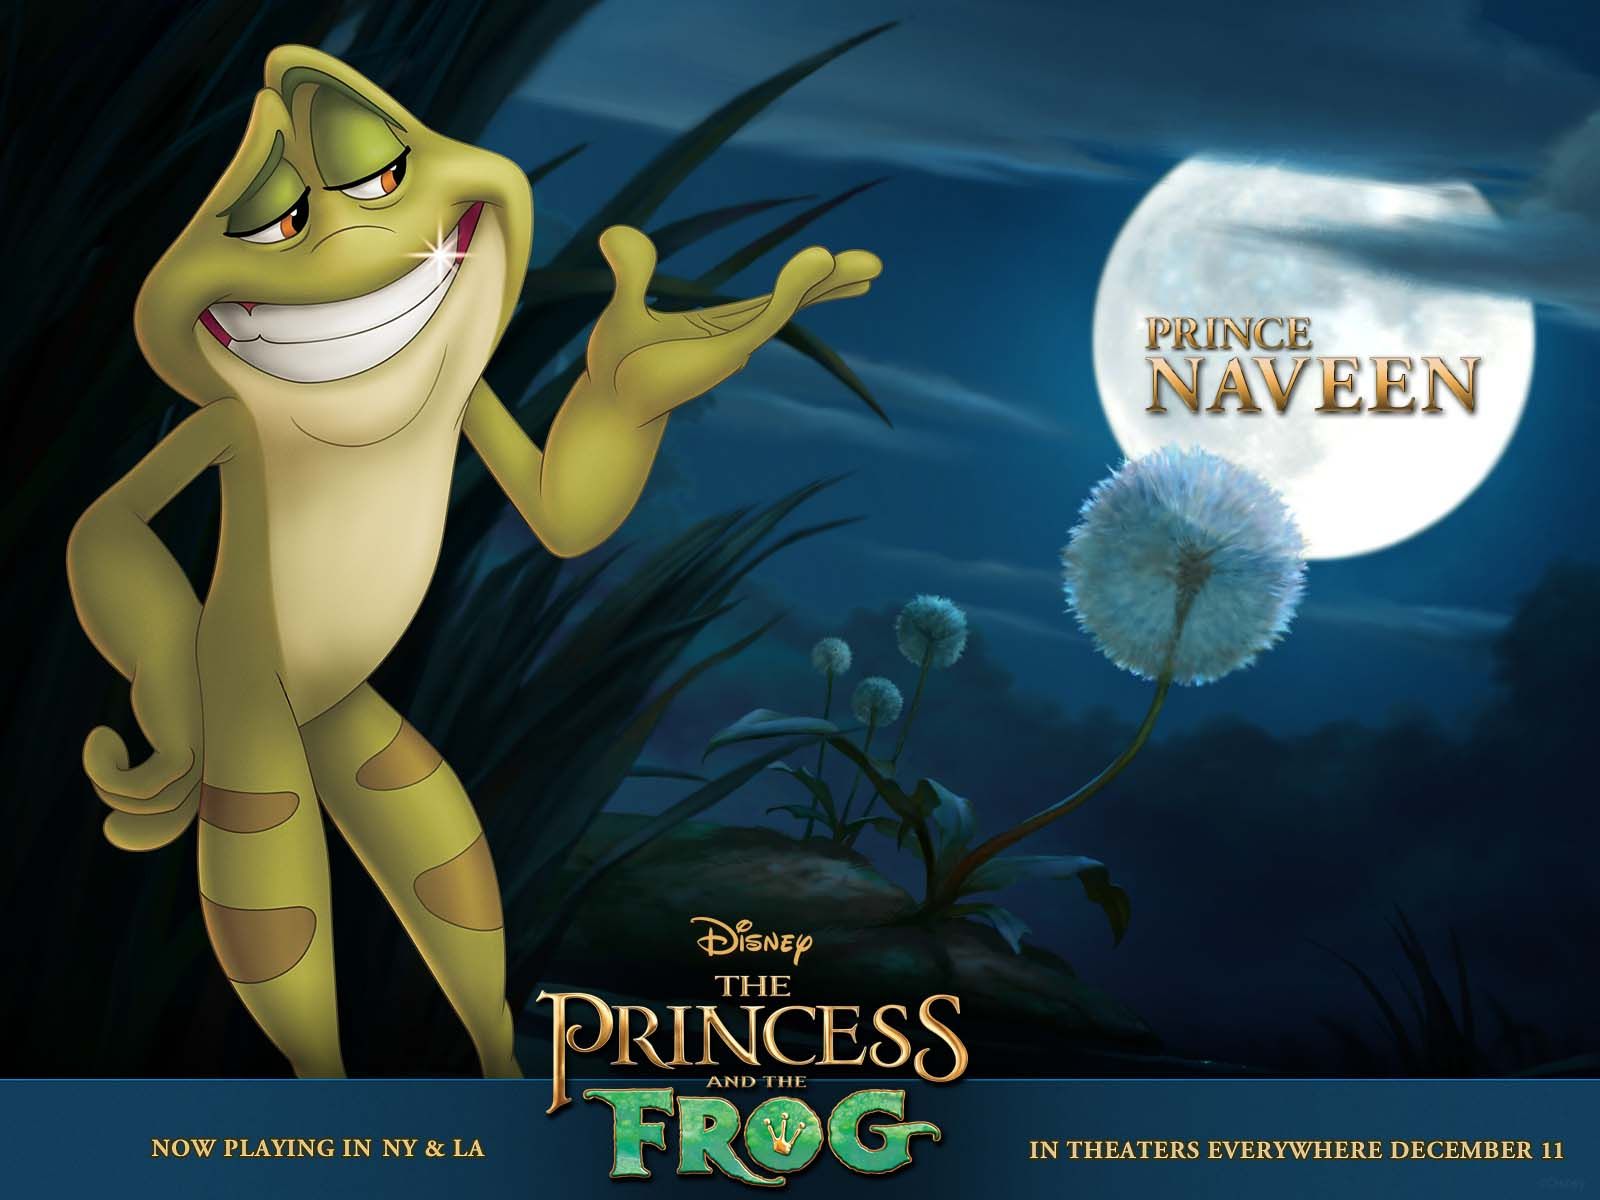 "The Princess and the Frog: Prince Naveen" desktop wallpaper (1600 x 1200 pixels)